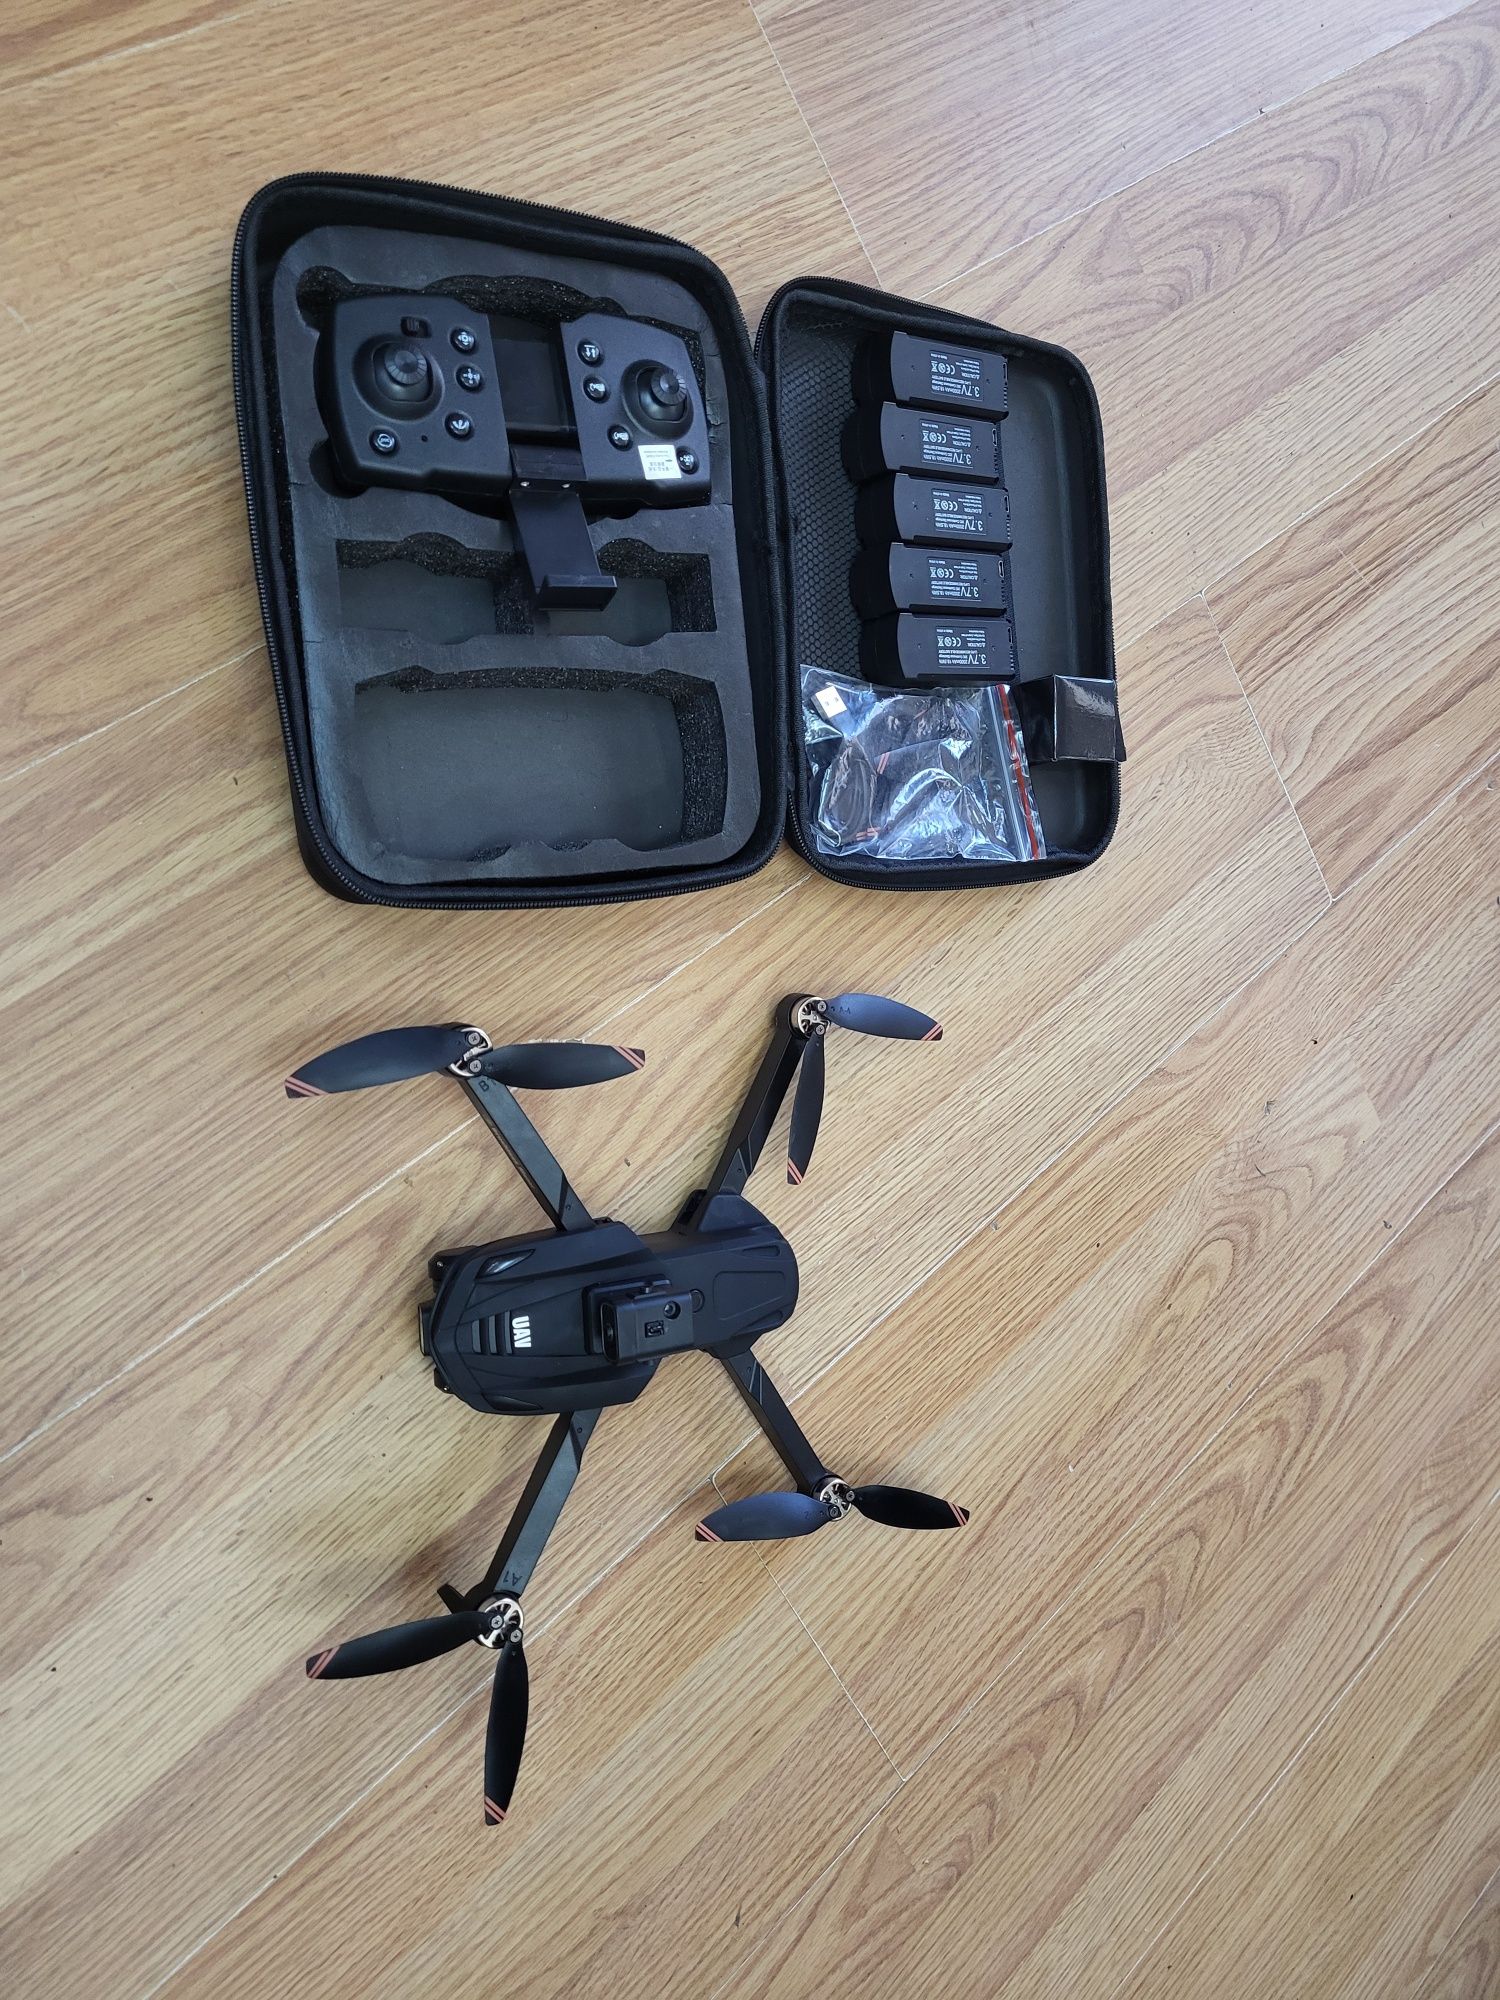 Vand drona Profesionala 8k dual camera V168 probata de 2 ori